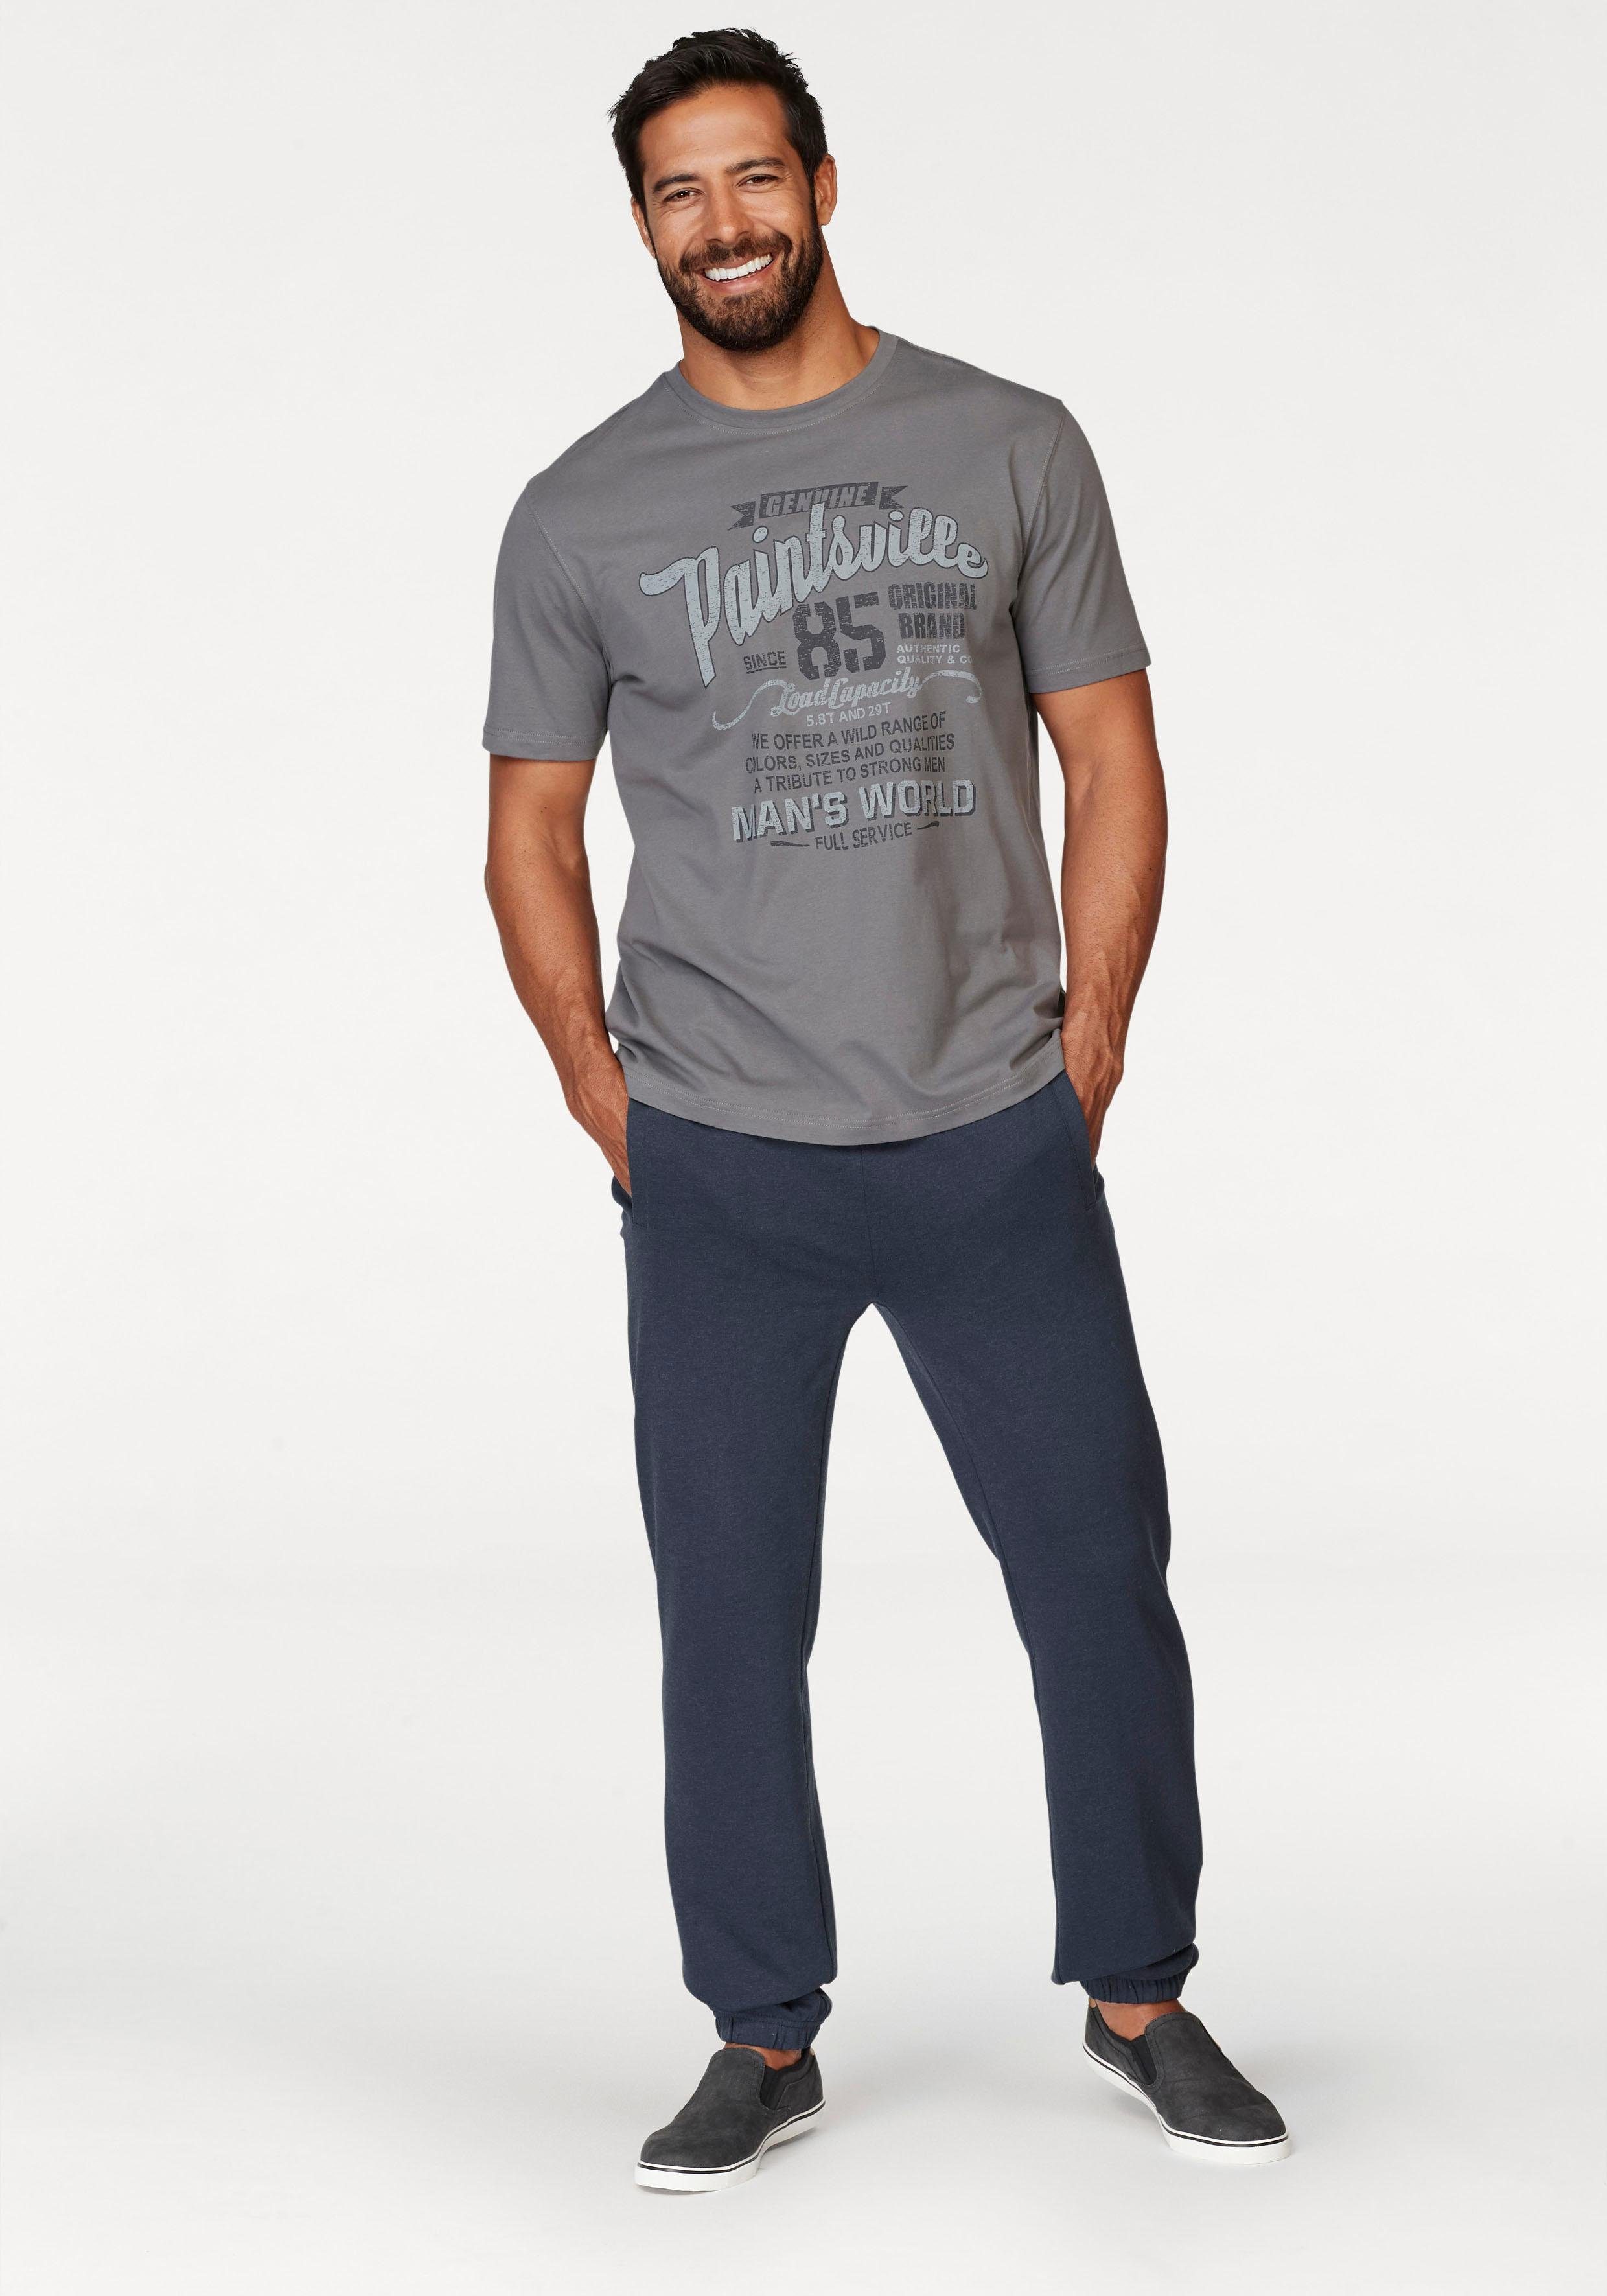 World dunkelgrau Man's mit Print T-Shirt